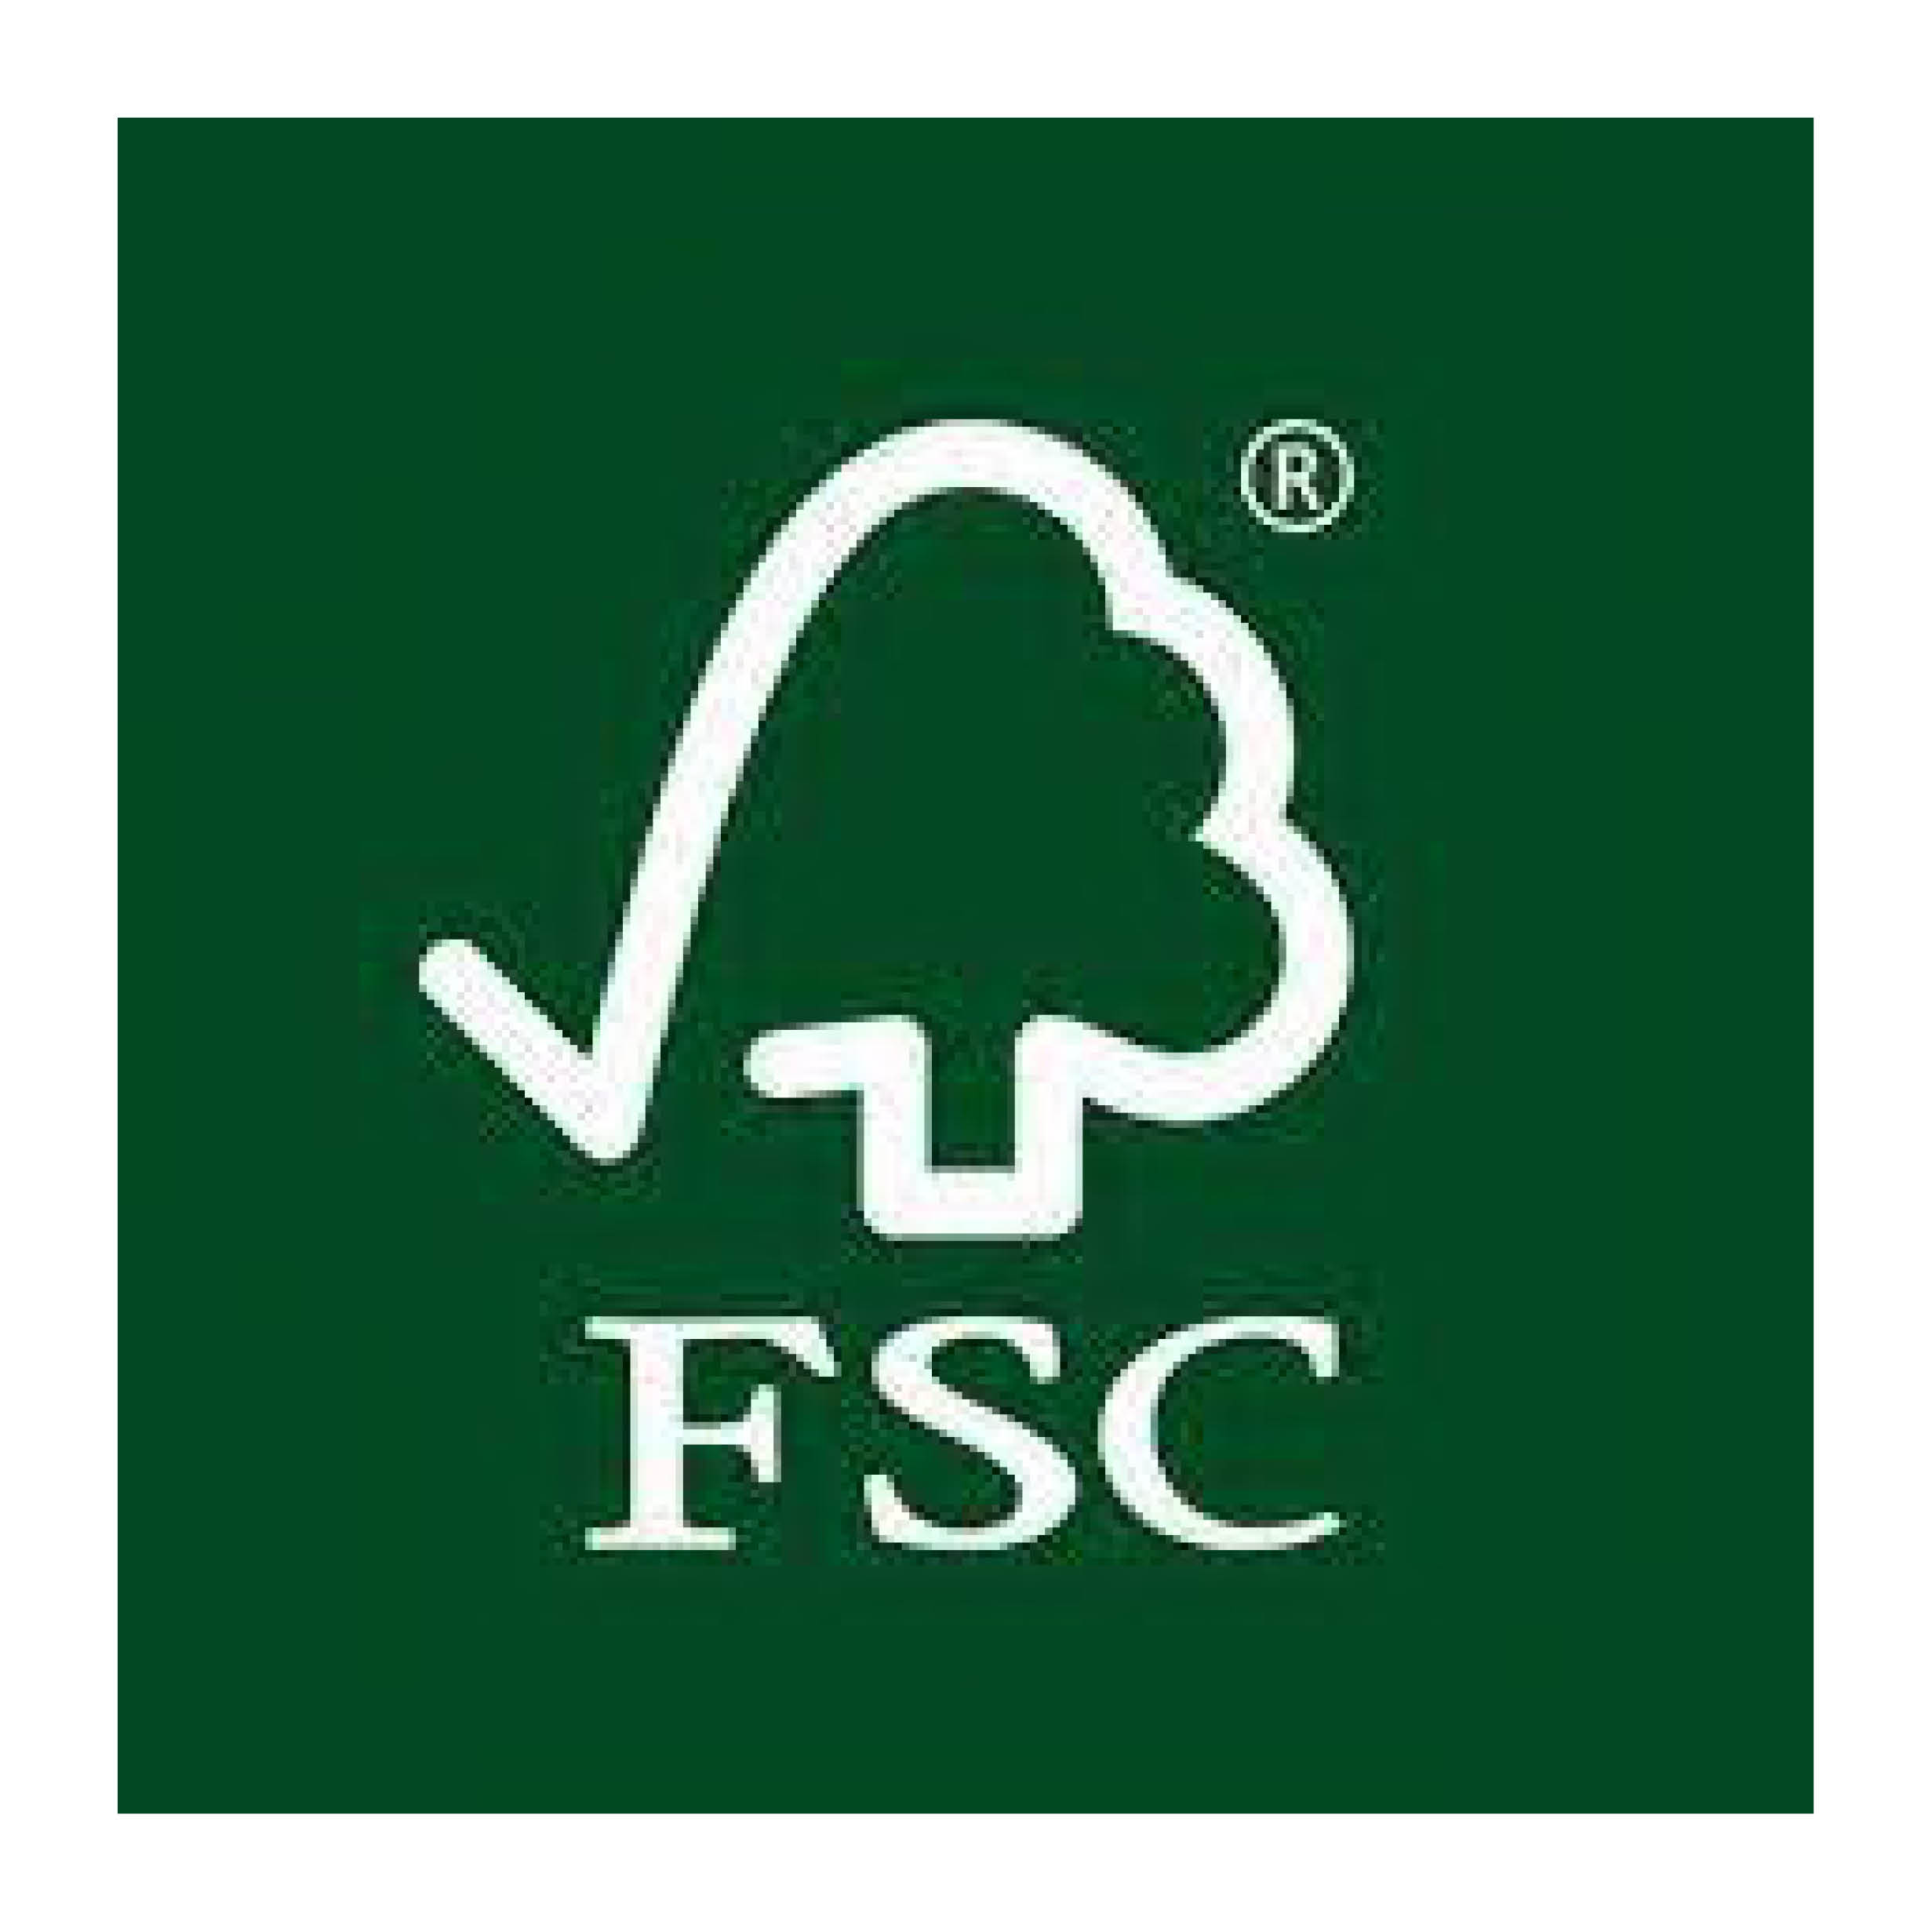 Taalkwadratuur-fsc-logo-klein